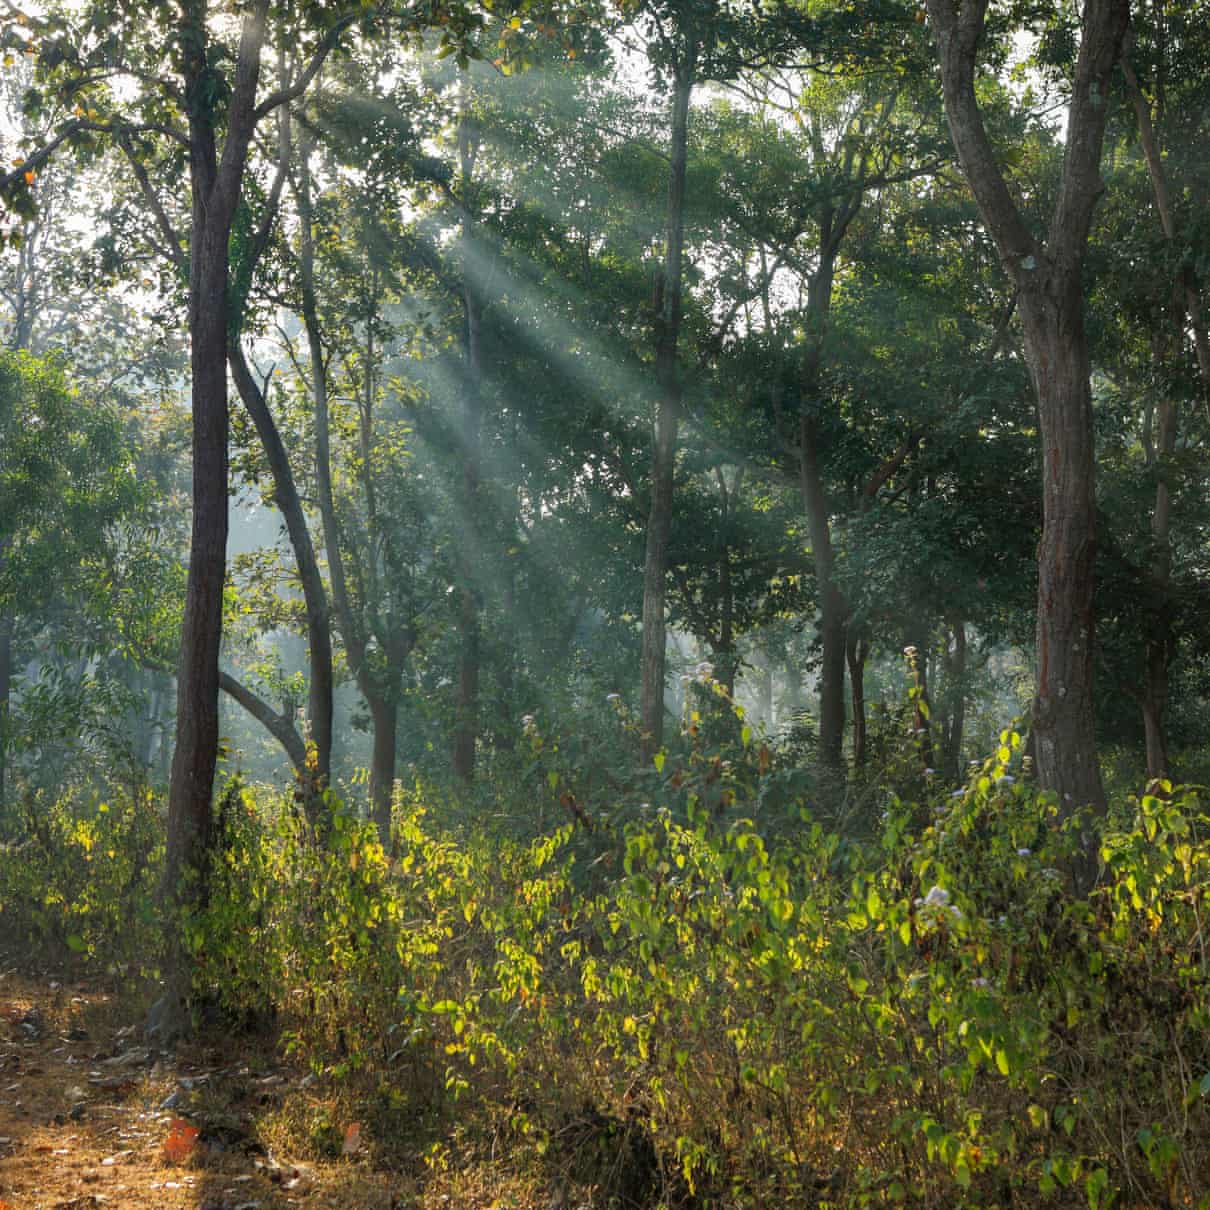 The forest in Chhattisgarh